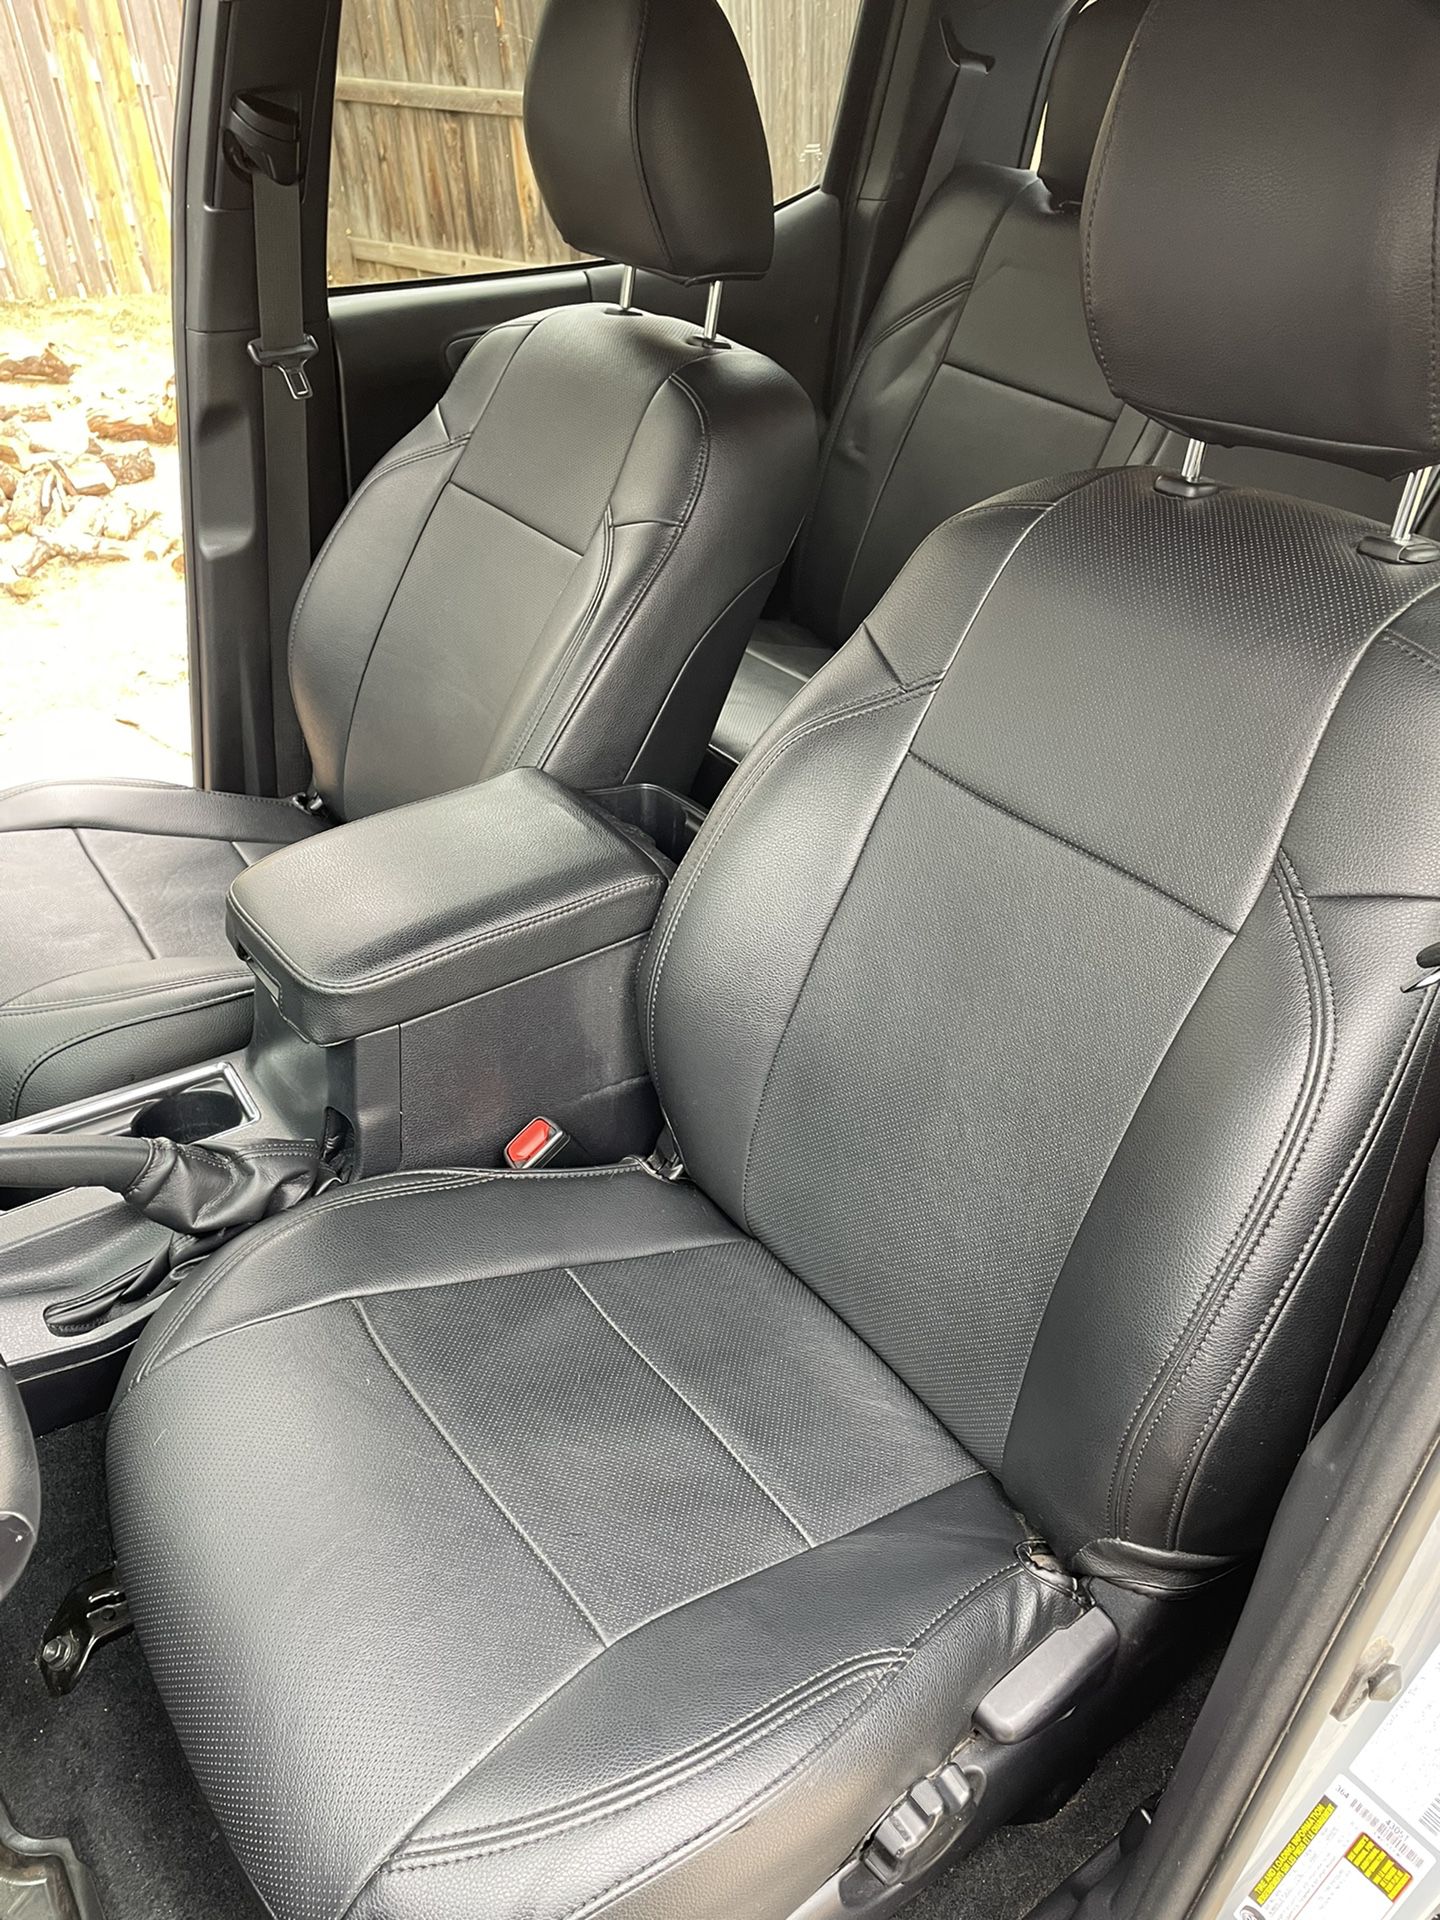 Clazzio Seat Covers 2019 Tacoma